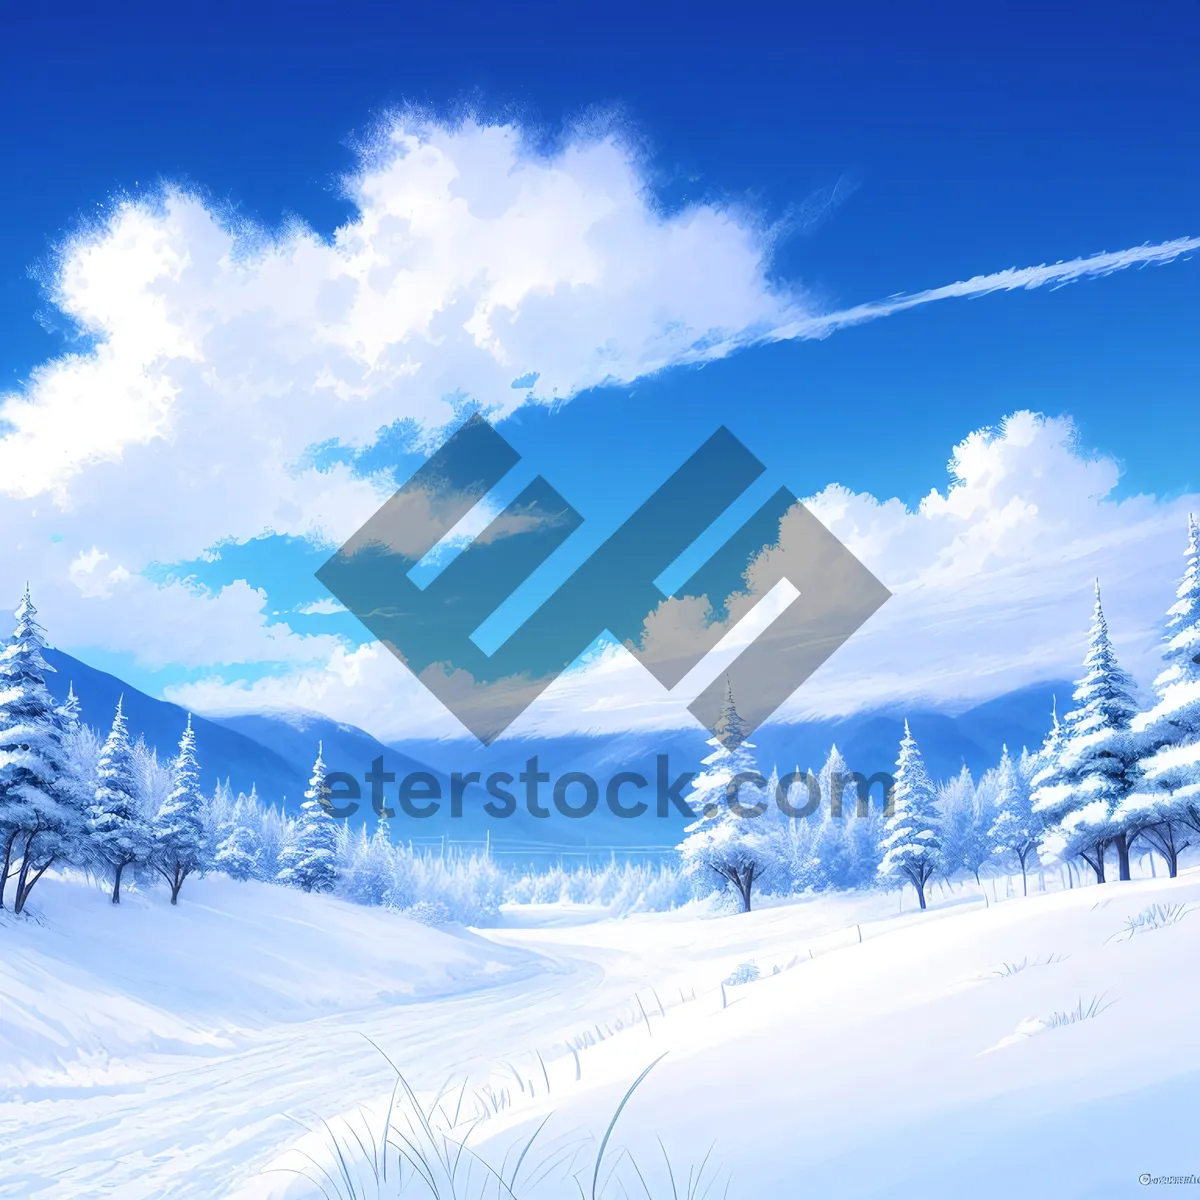 Picture of Snowy Alpine Peaks against a Frosty Winter Sky